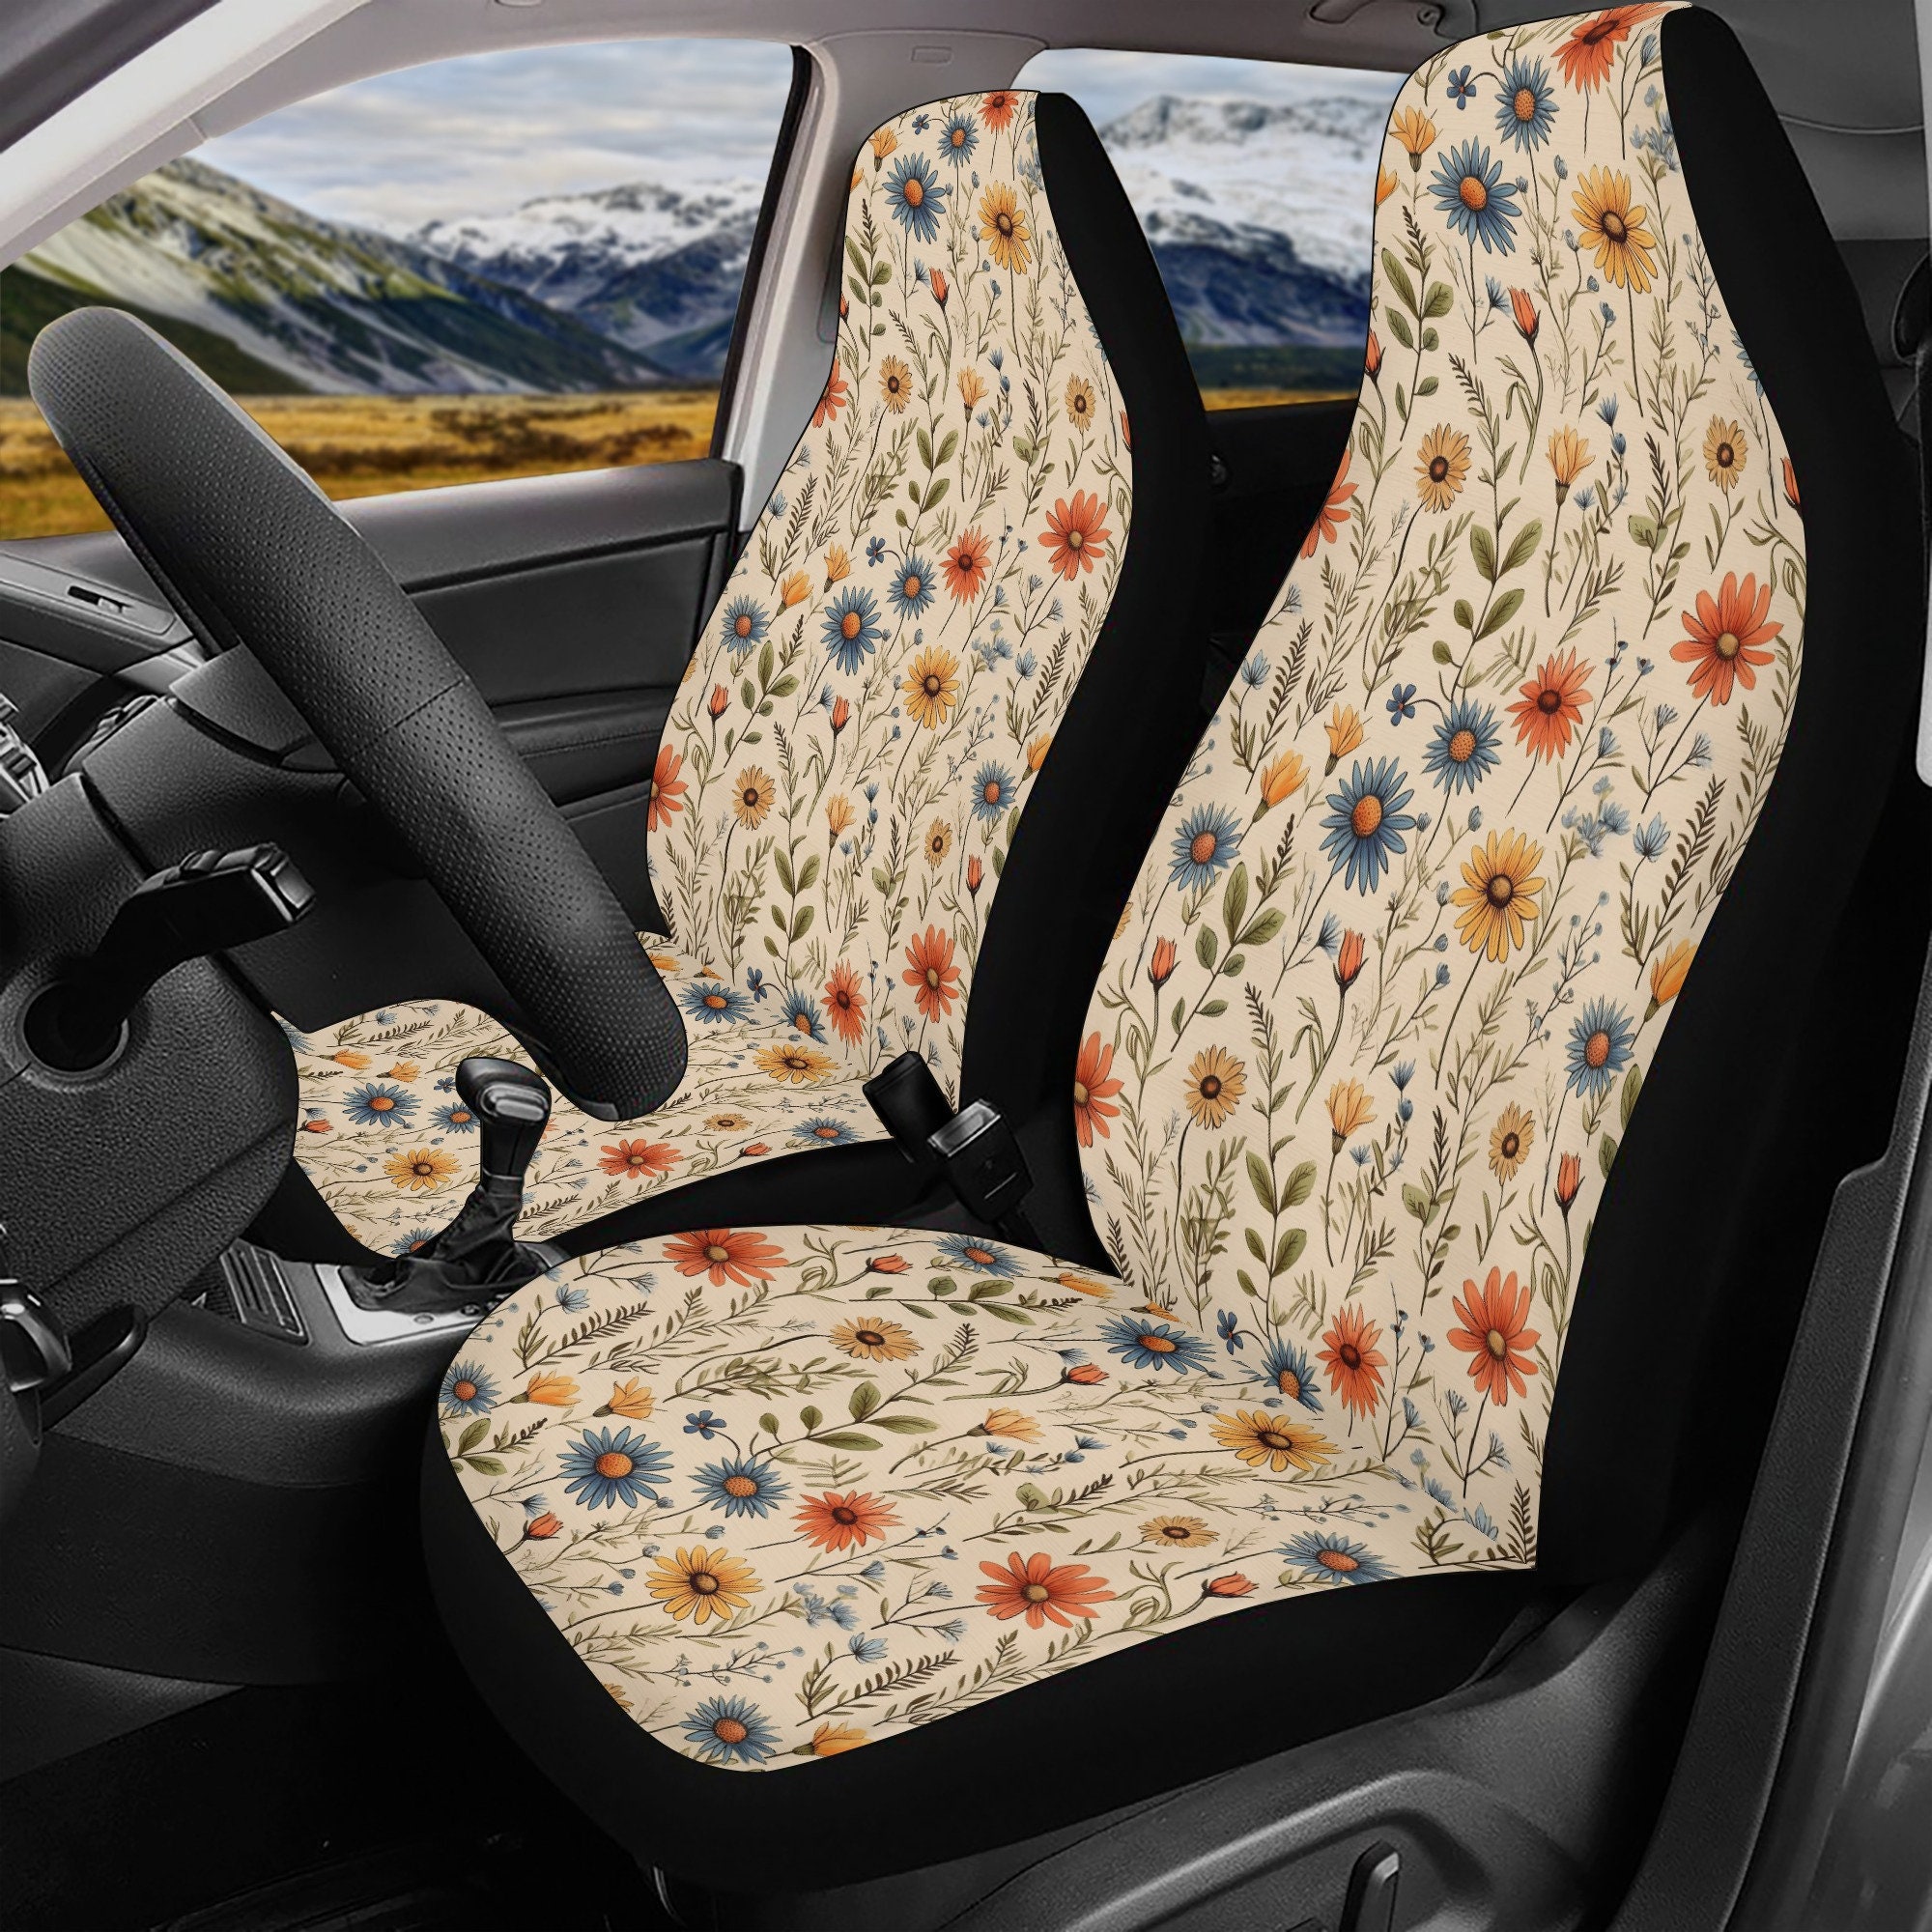 Daisy Flowers Car Seat Covers, Car Decor Gift